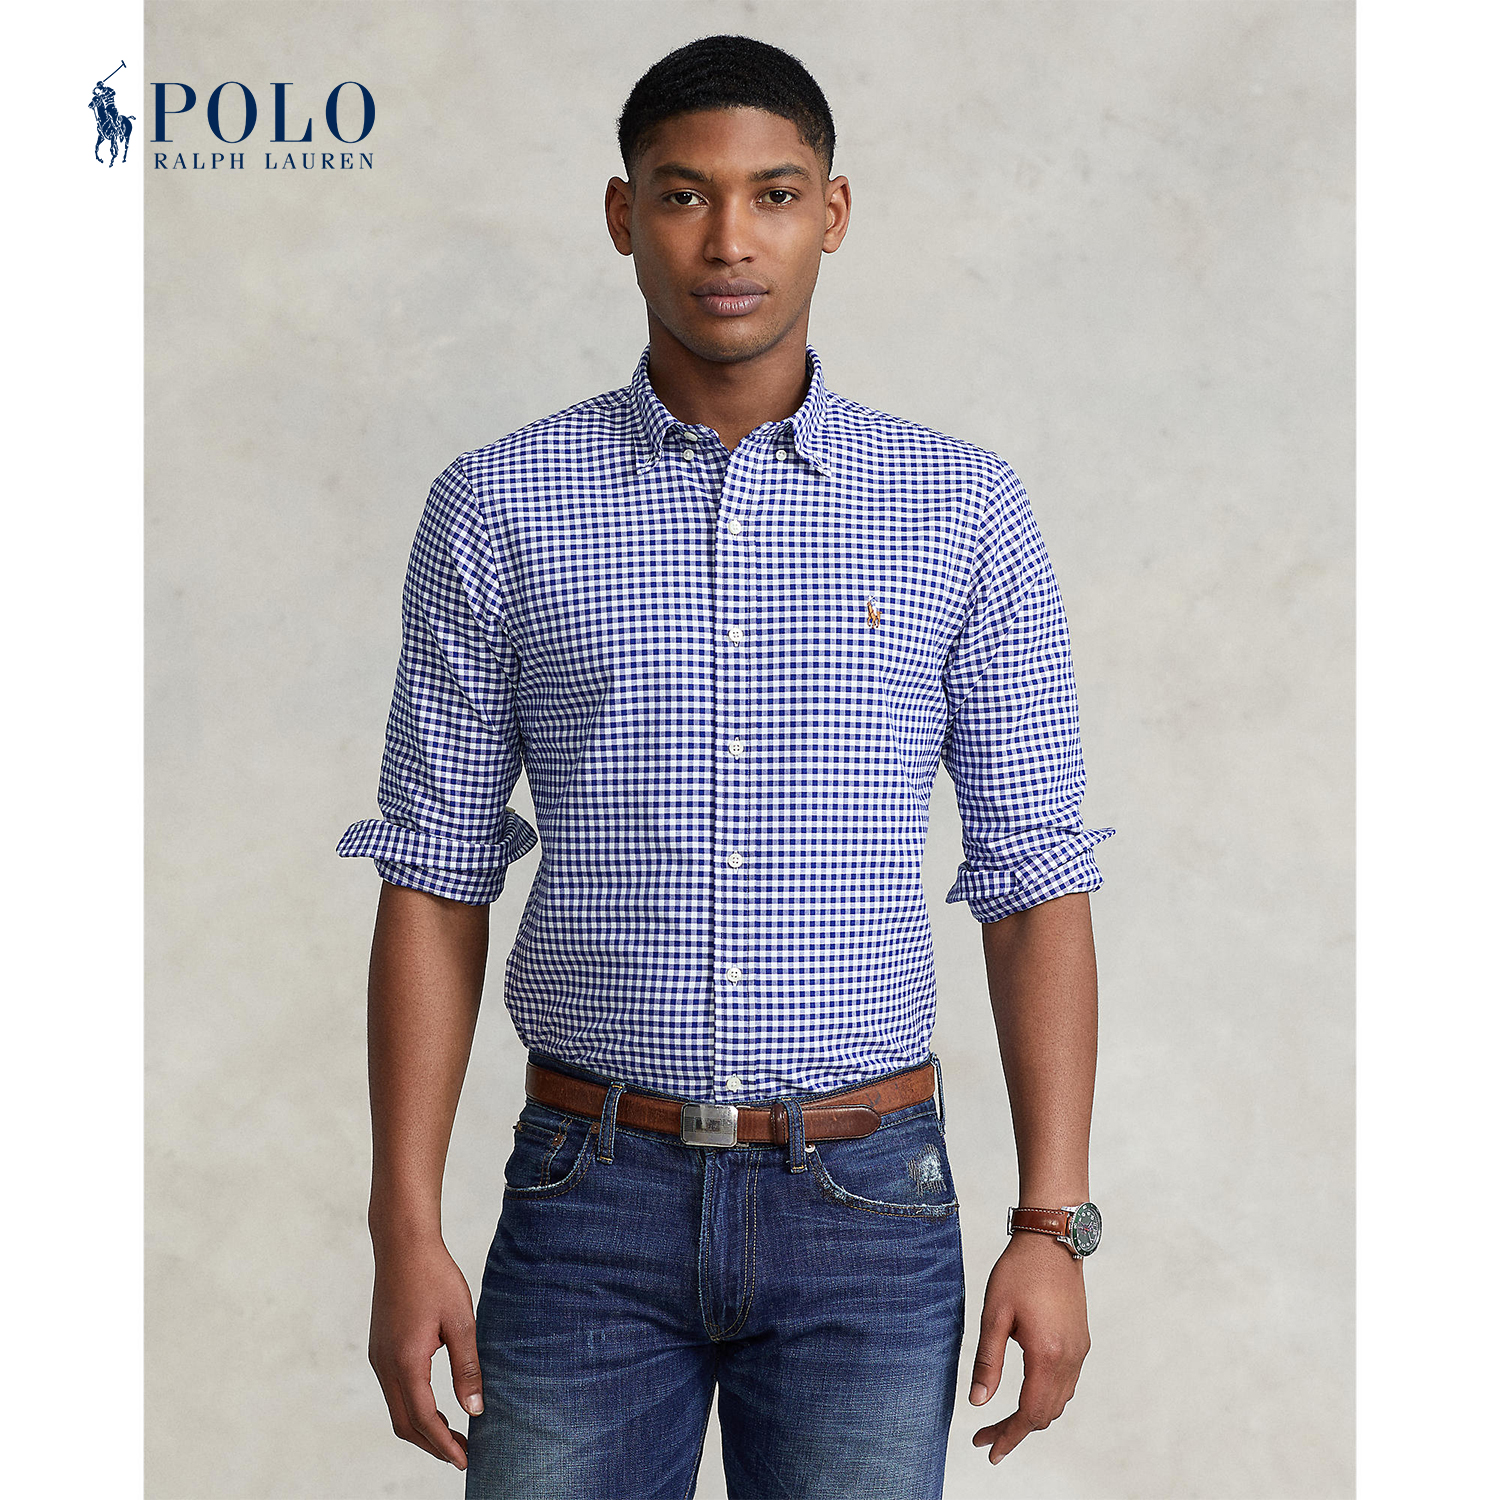 POLO RALPH LAUREN Men's Check Oxford Sportshirt, Blue/White, S at   Men's Clothing store